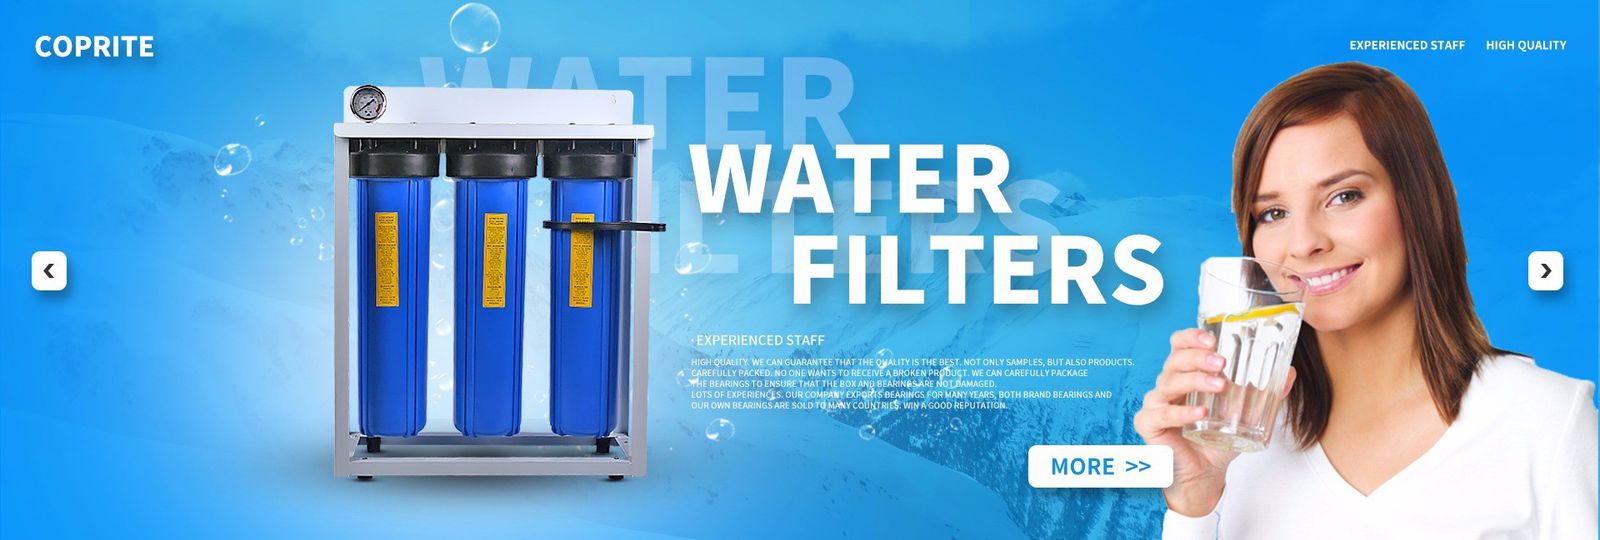 caja del filtro de agua